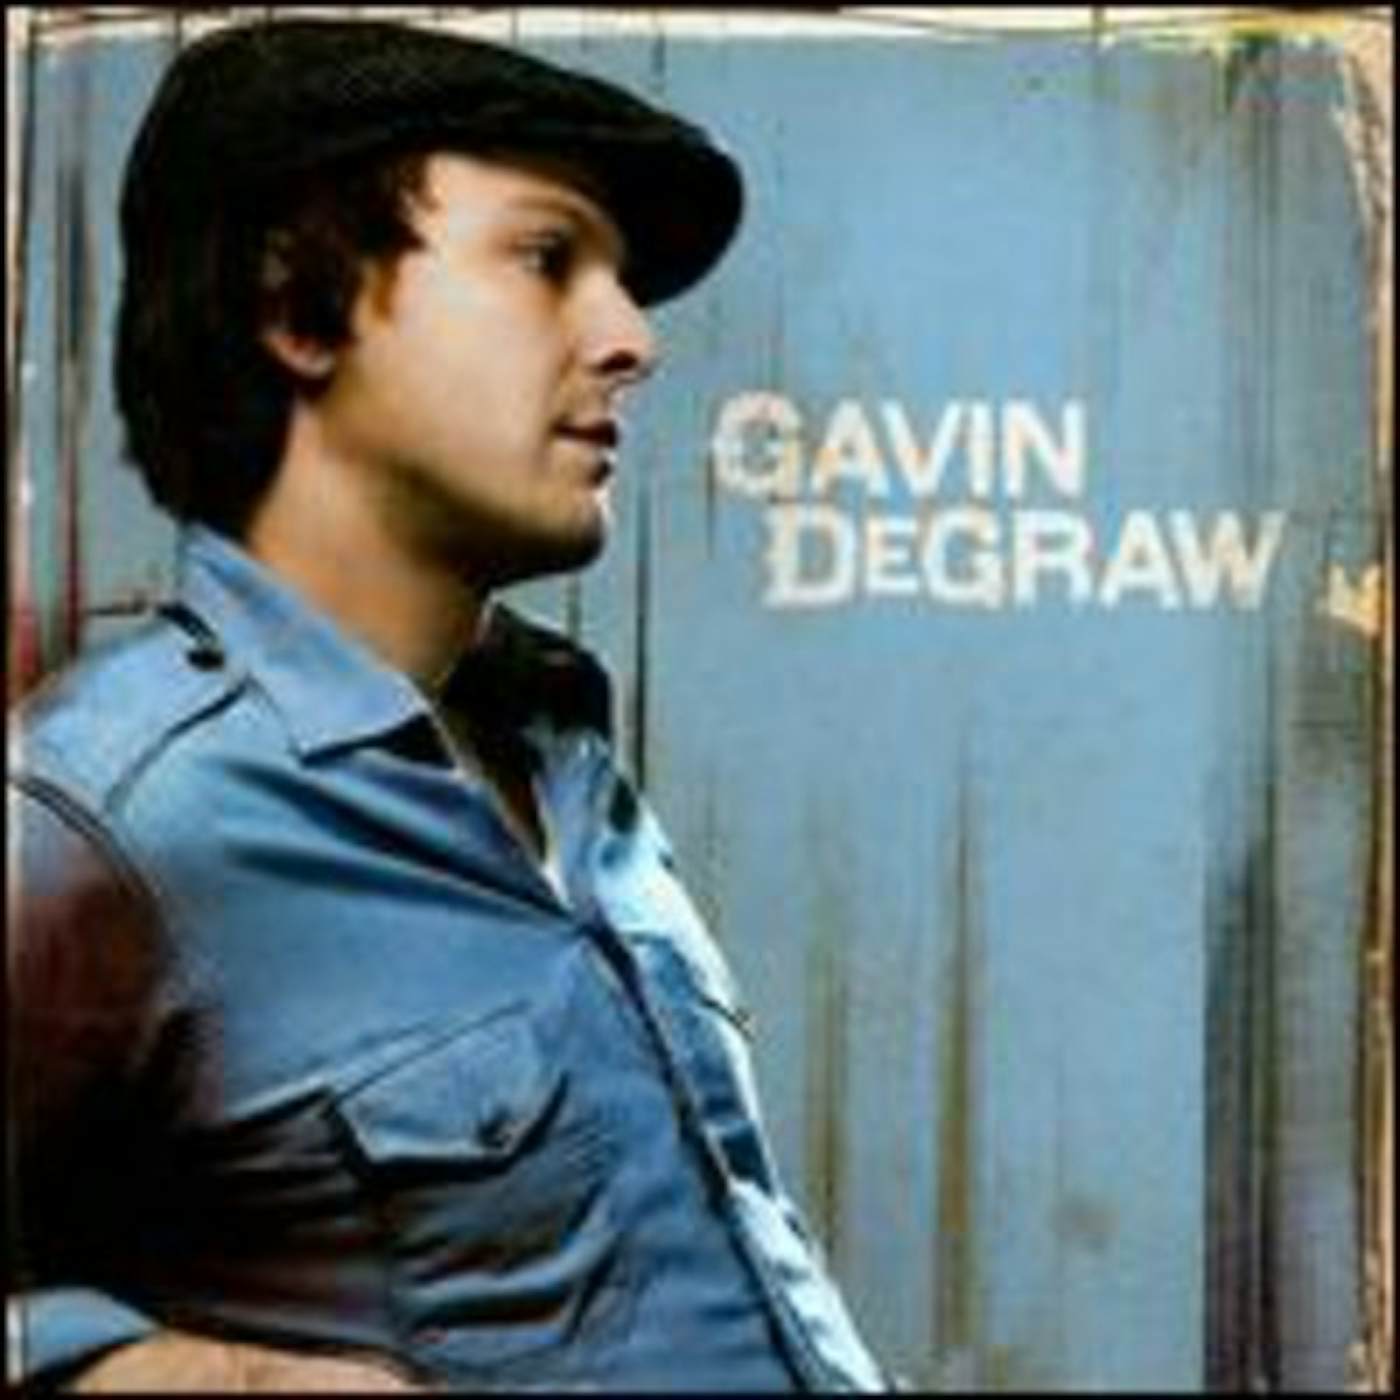 GAVIN DEGRAW CD